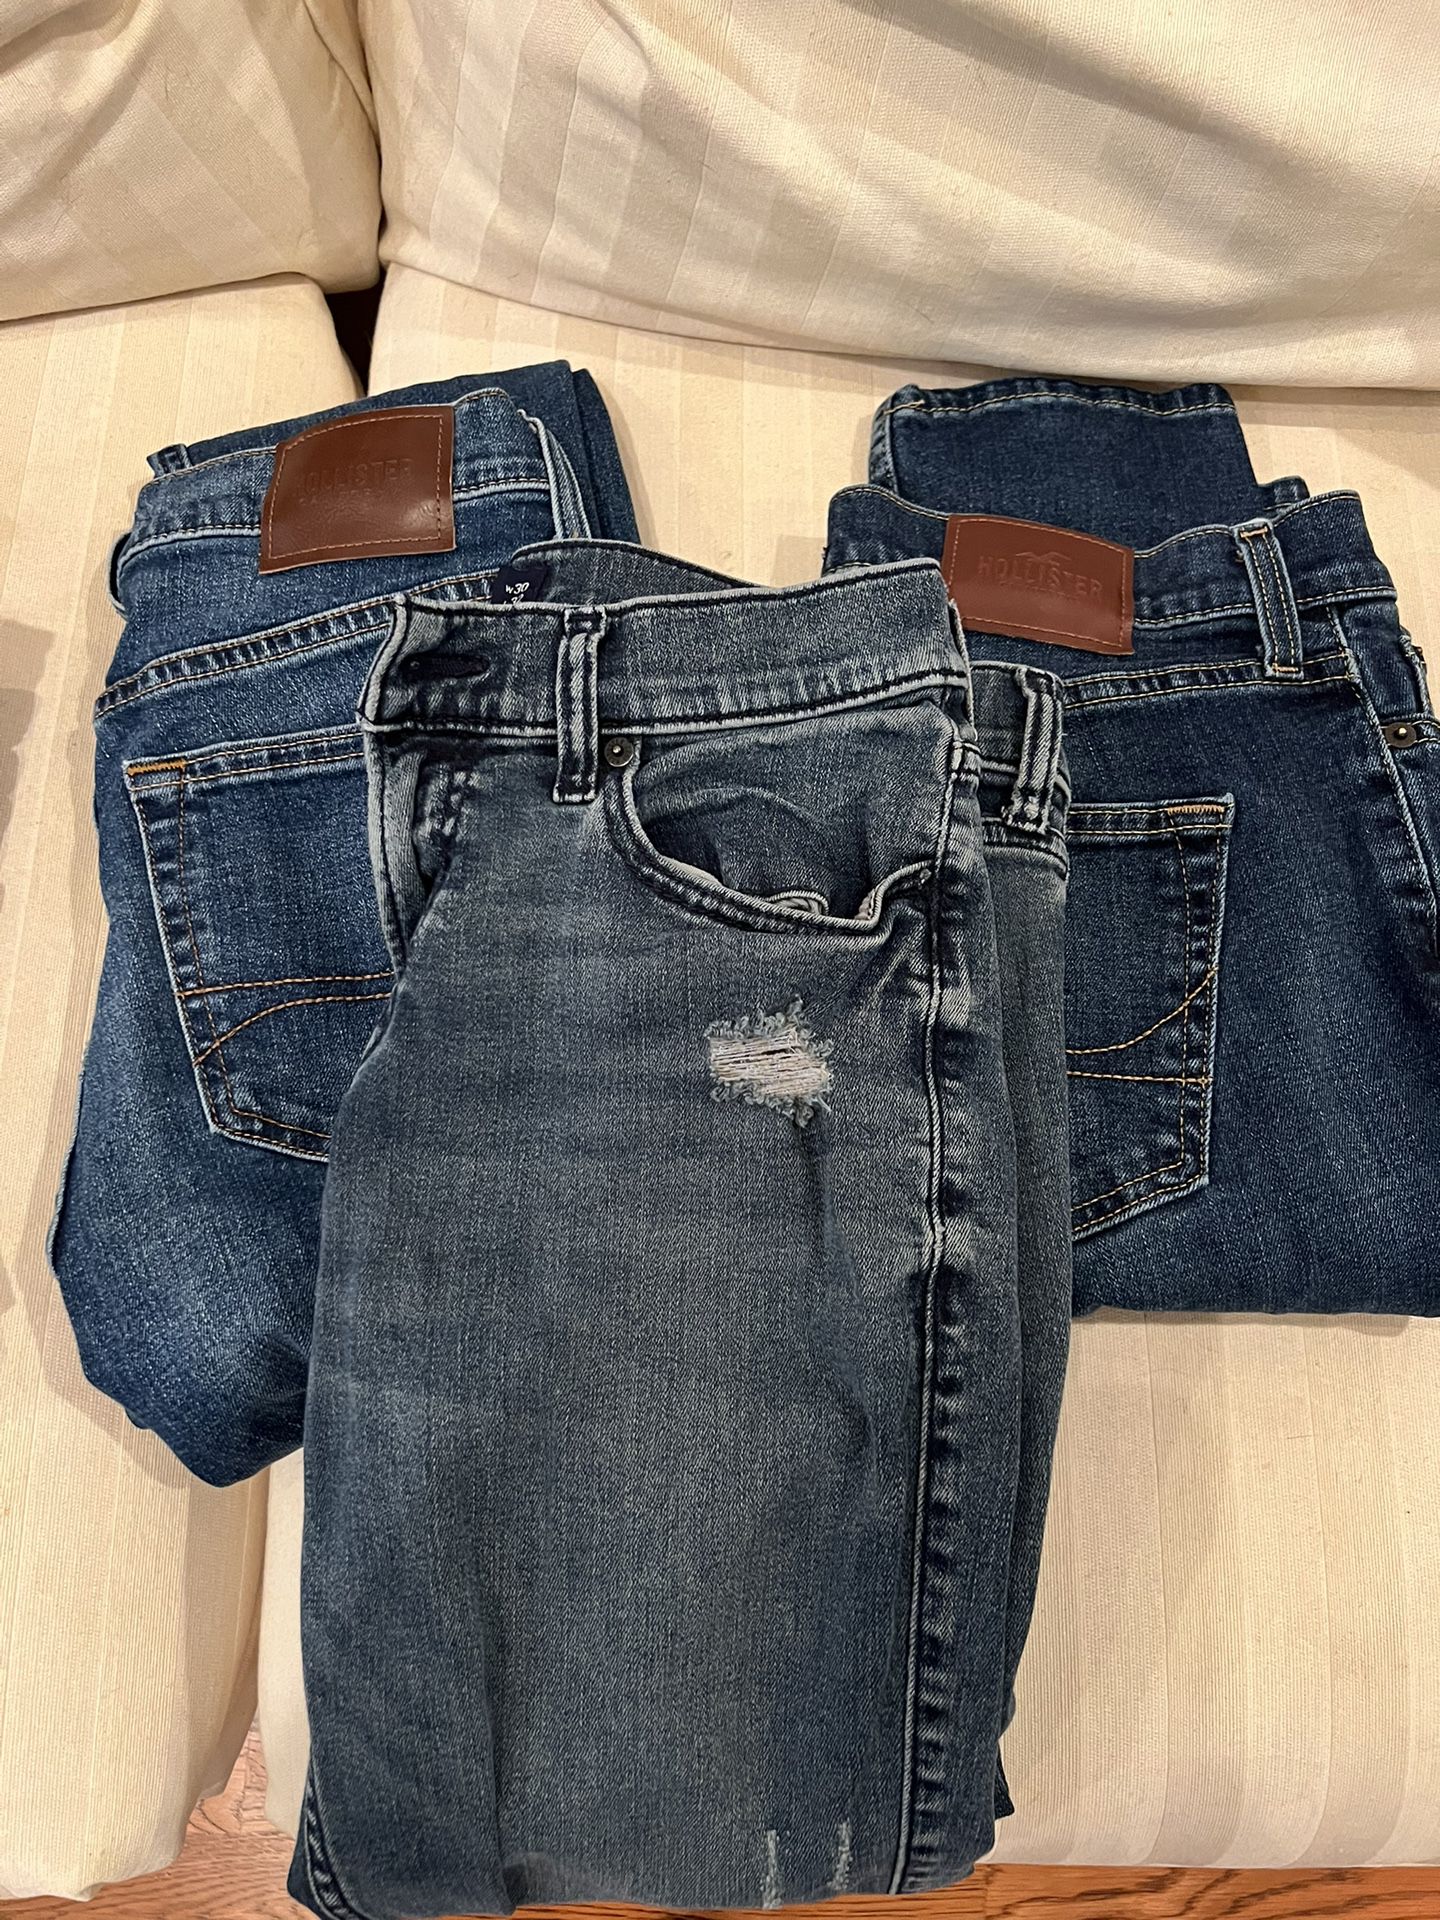 10 Pair Excellent Condition Men’s Designer Jeans; $300 for all 10